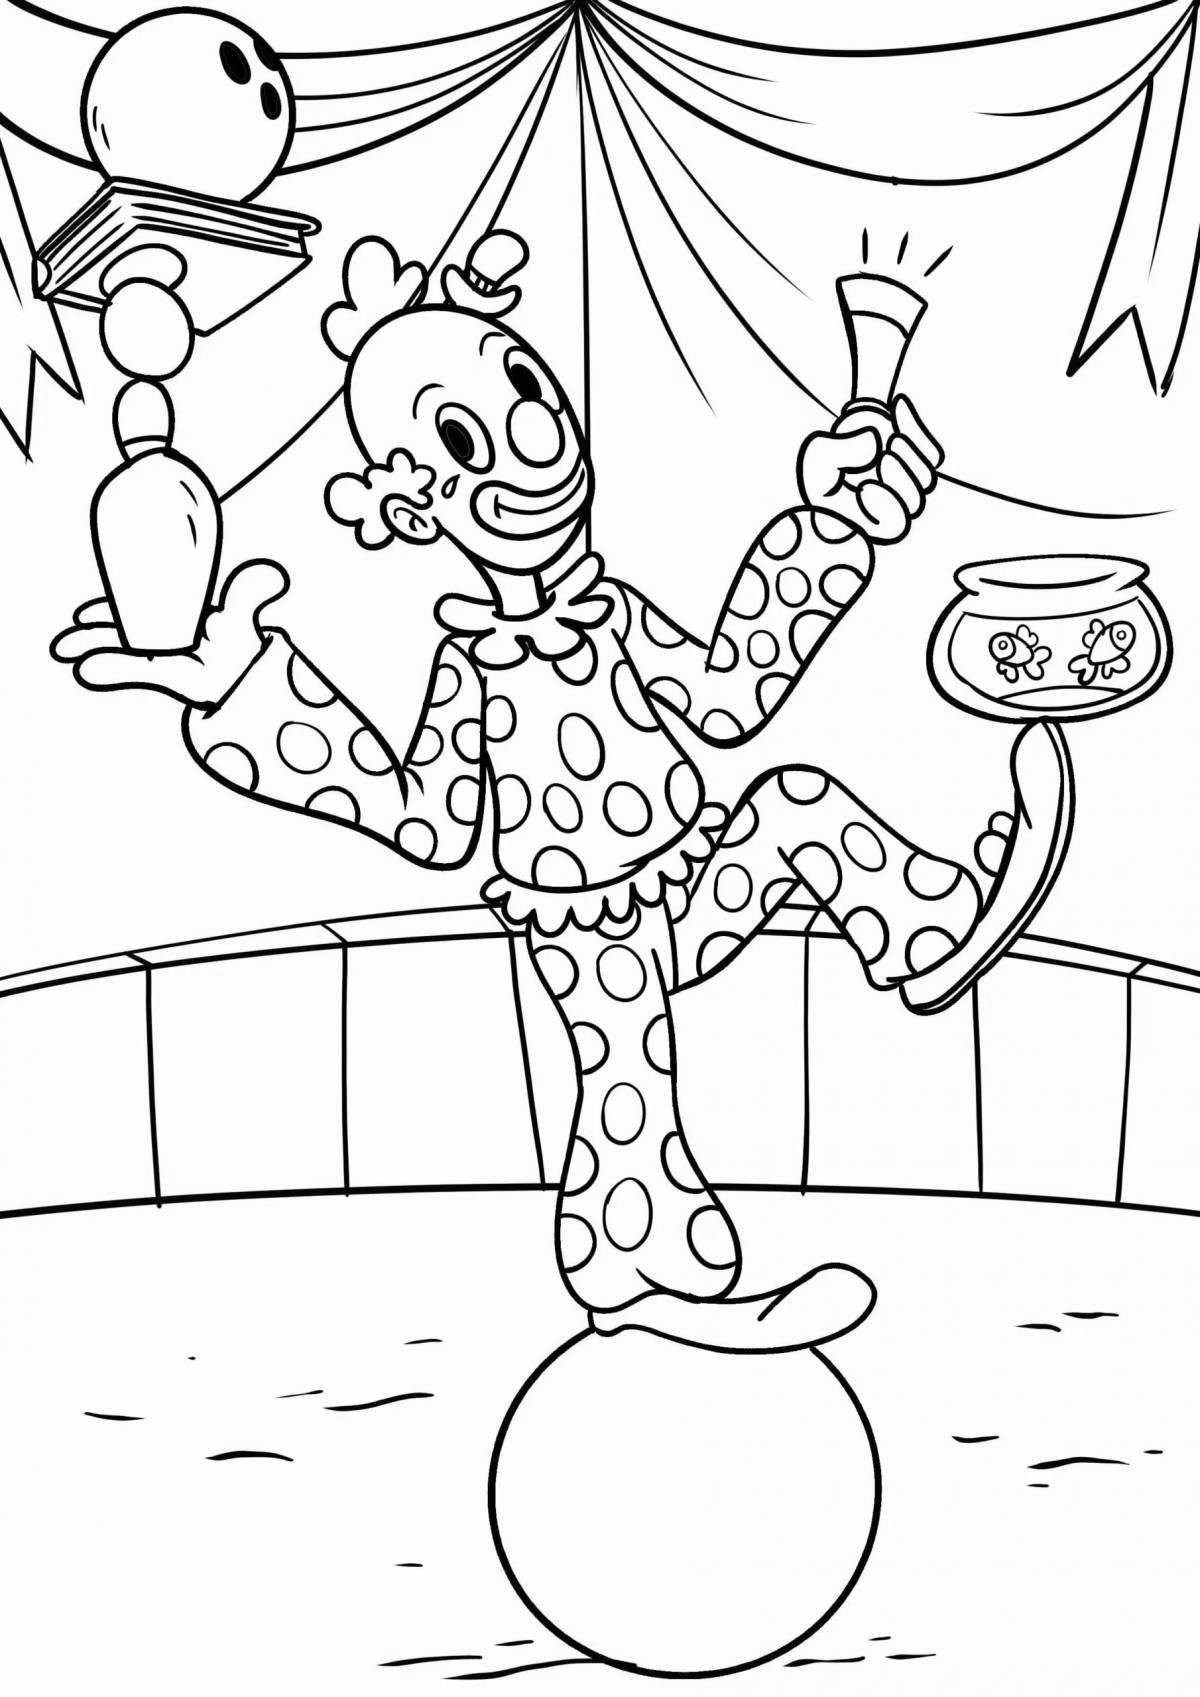 Coloring page joyful circus